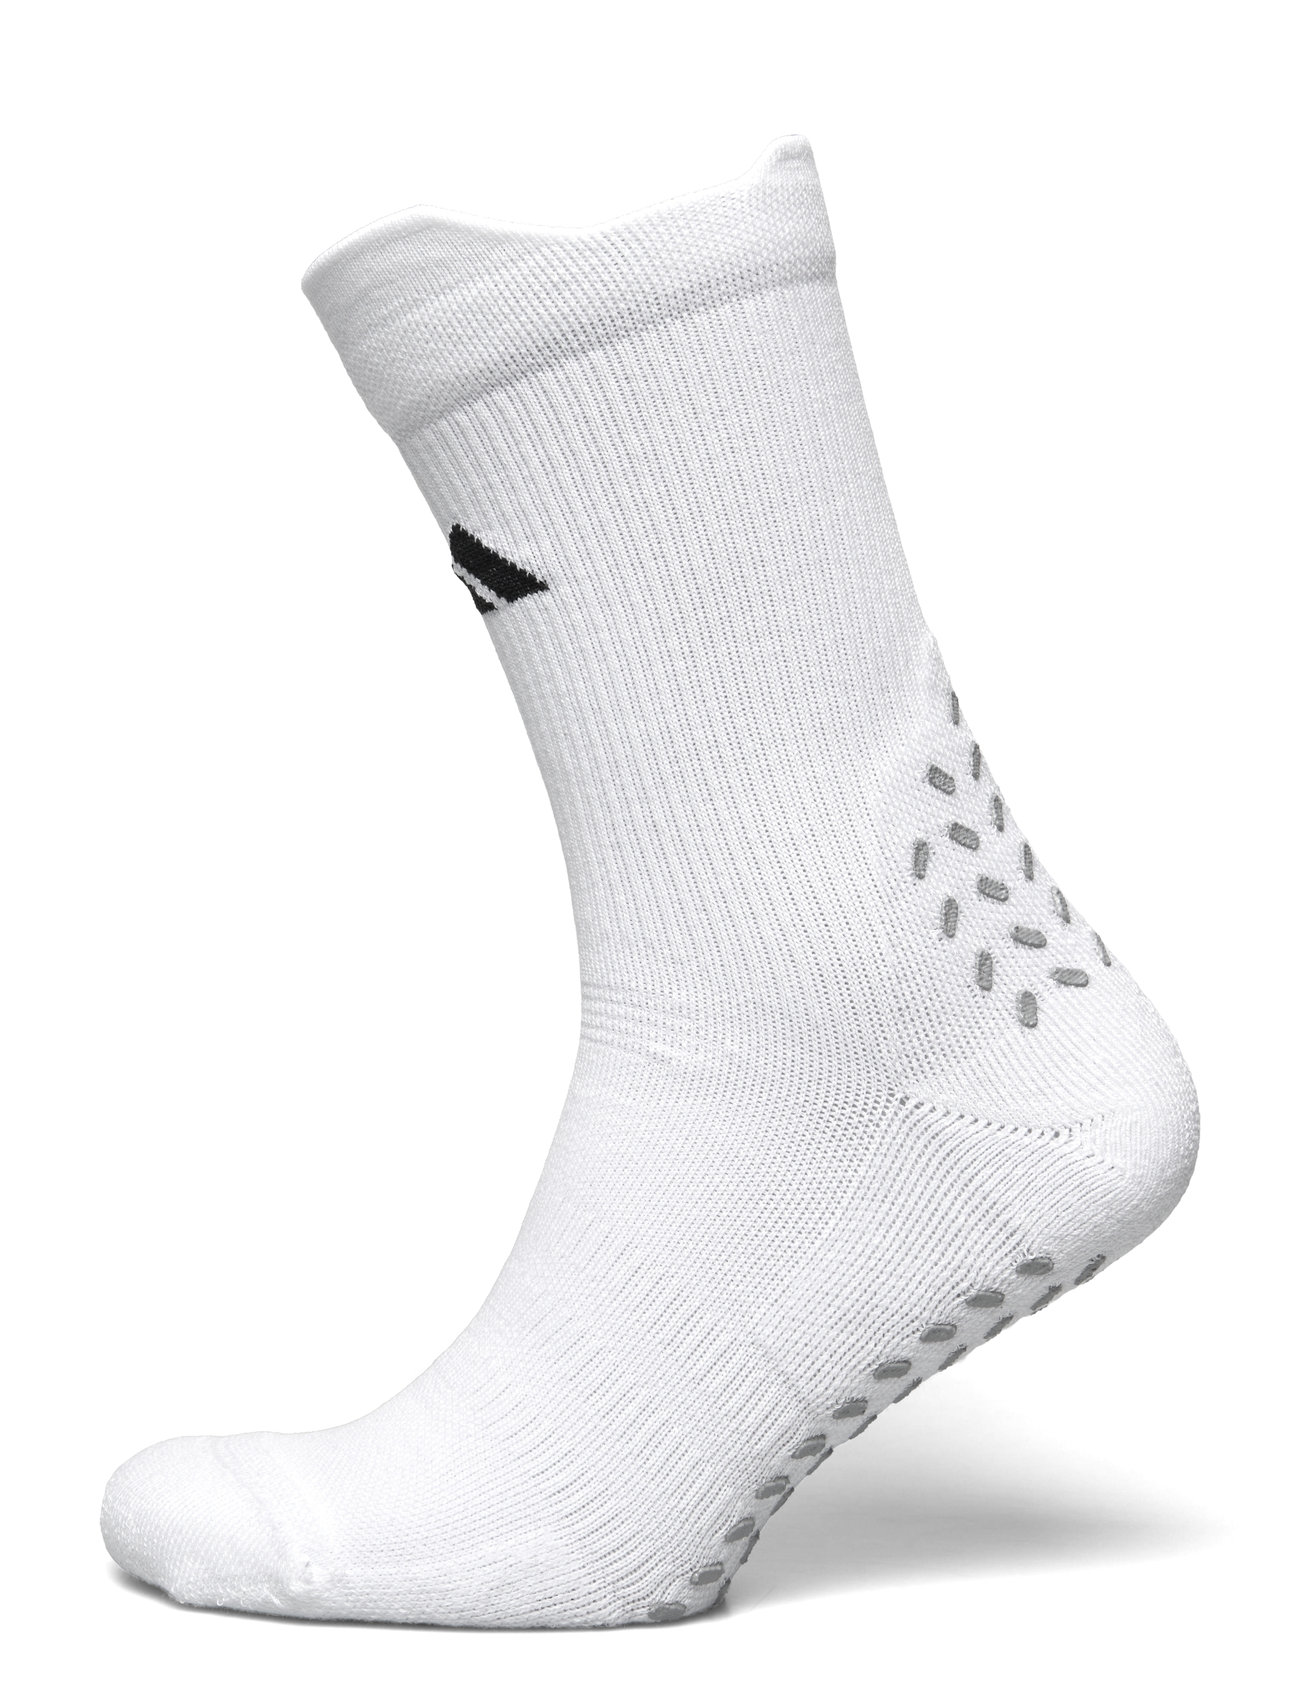 Adidas Football Grip Printed Crew Performance Socks Cushi D Sport Socks Regular Socks White Adidas Performance